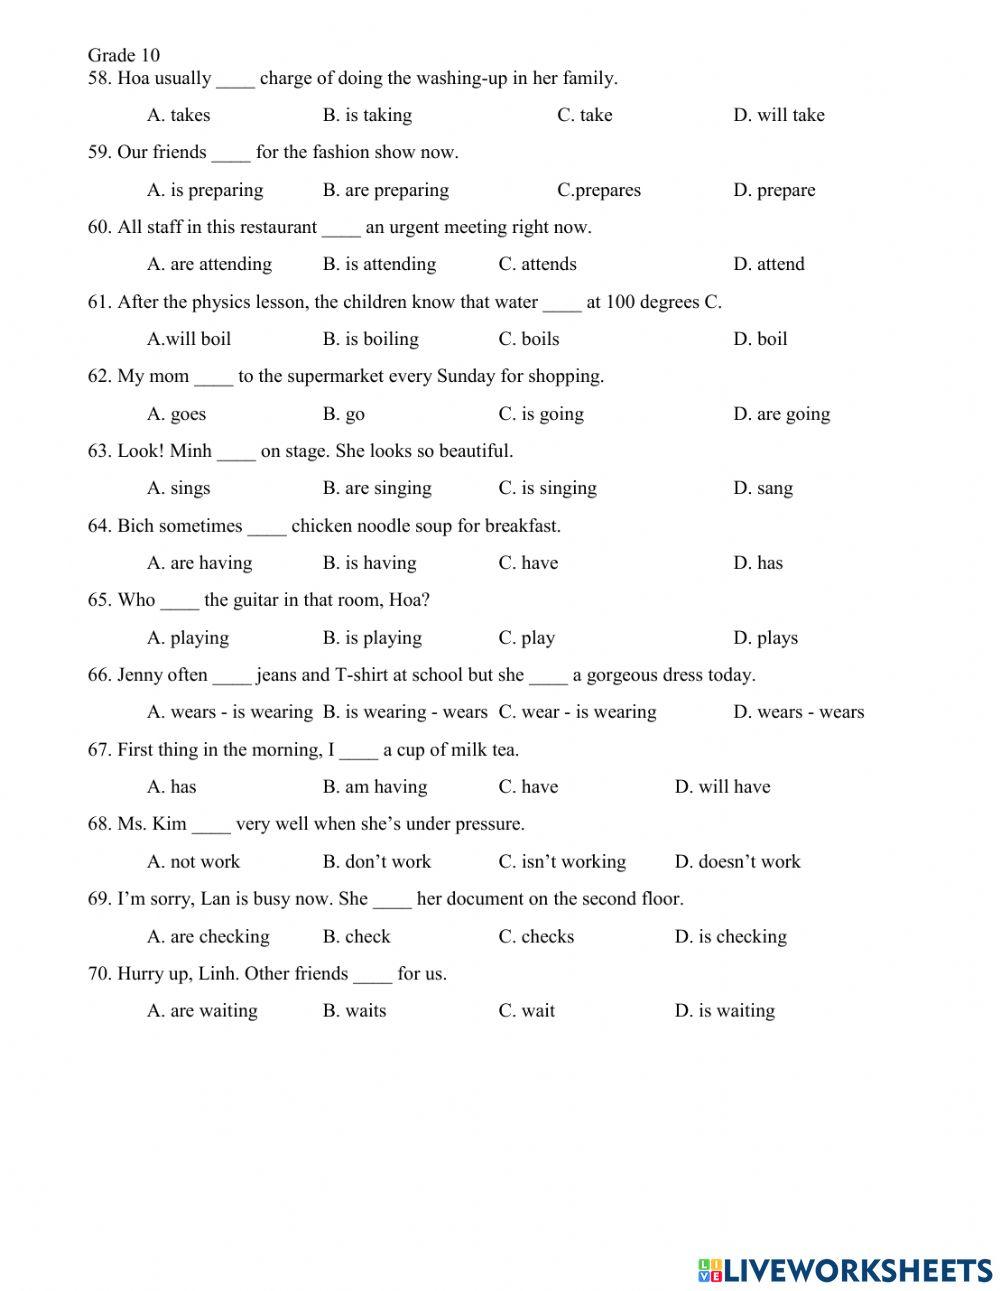 Test for unit 1-grade 10 (thí điểm)